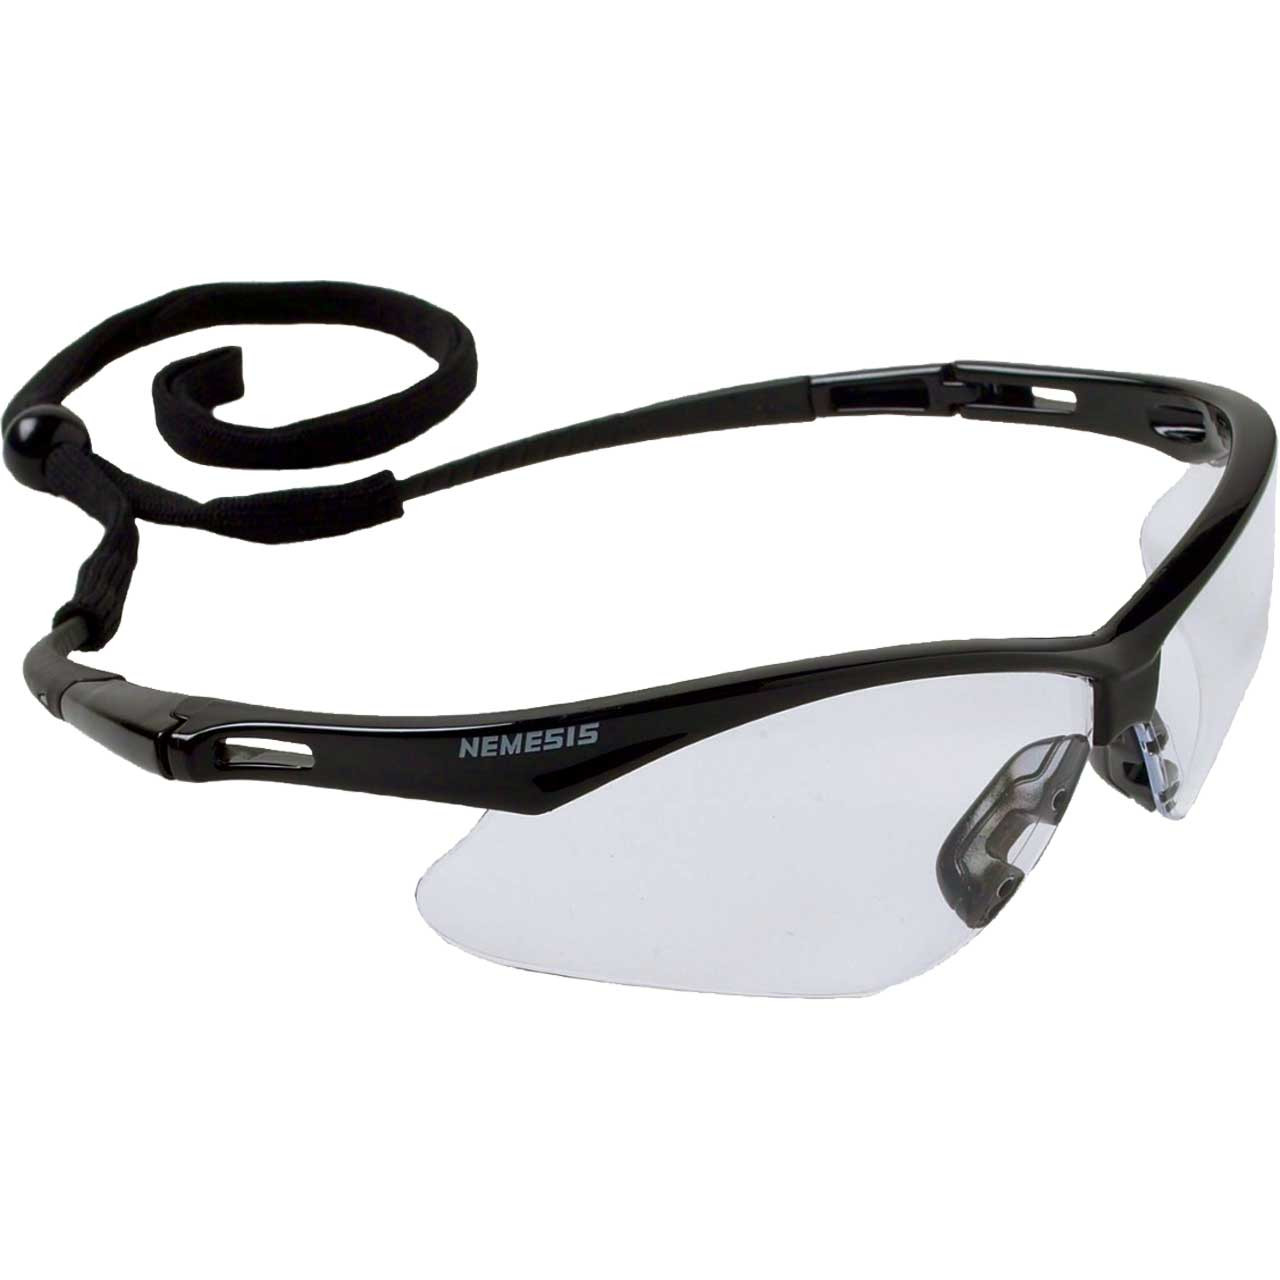 Kleenguard Nemesis Clear Anti Fog Lens And Black Frame Safety Glasses Ram Welding Supply